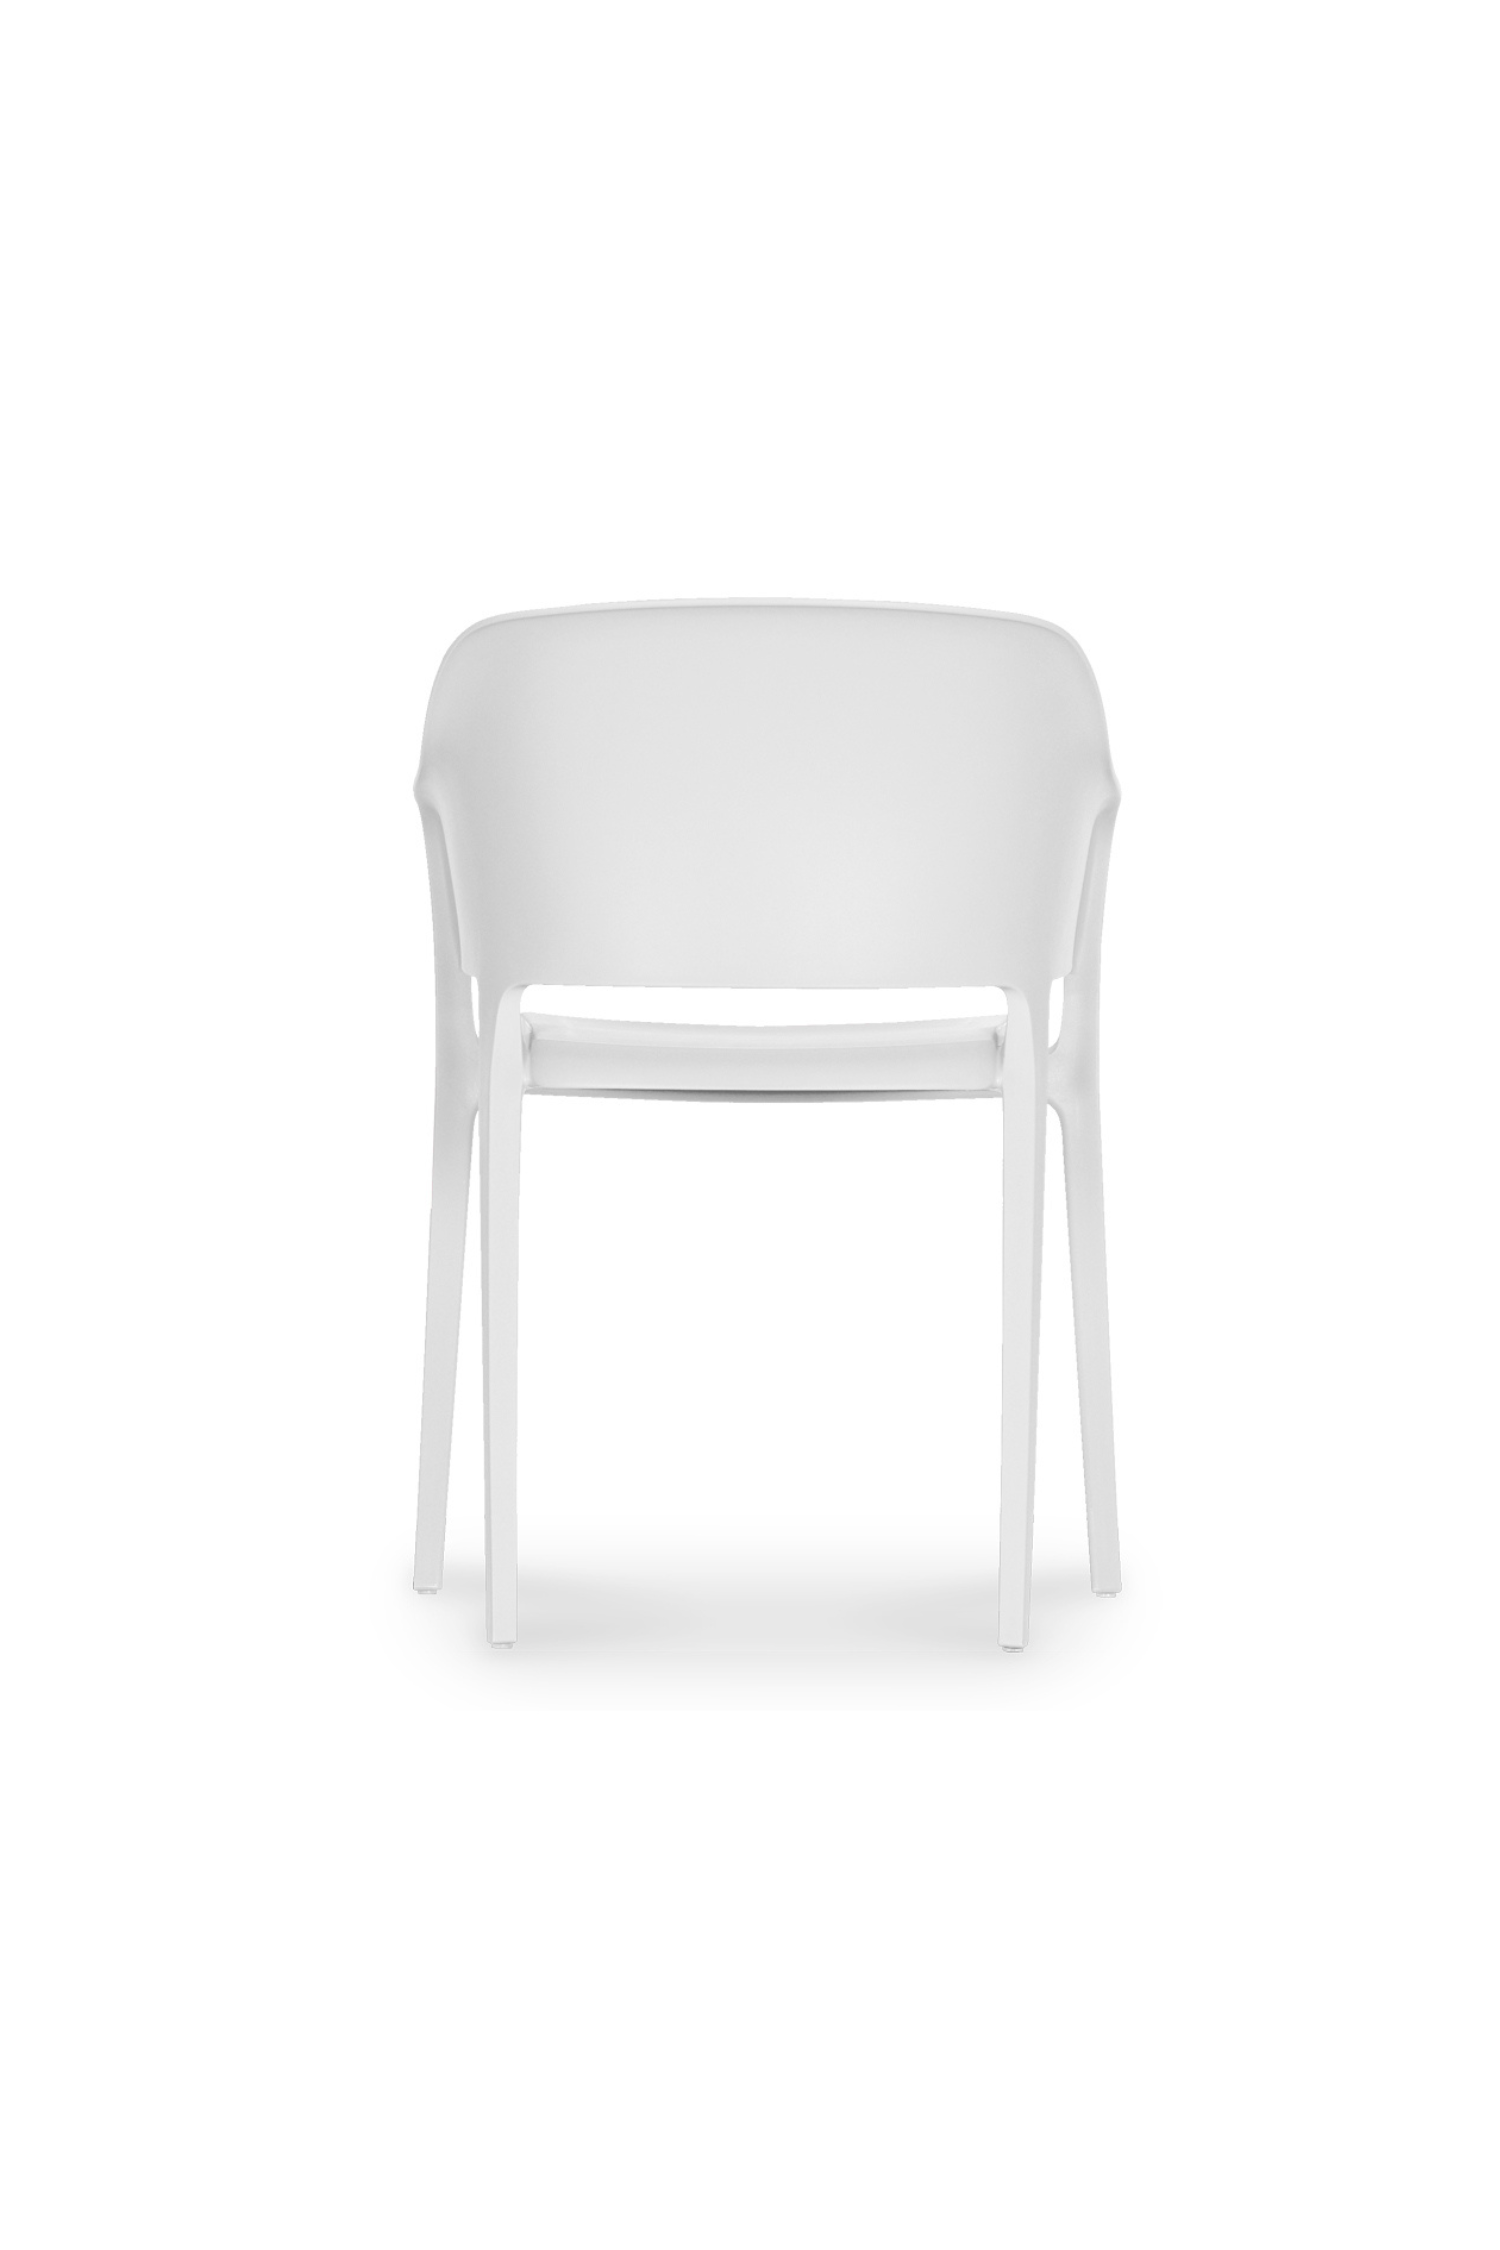 Farrah Outdoor Dining Chair - Set of 2